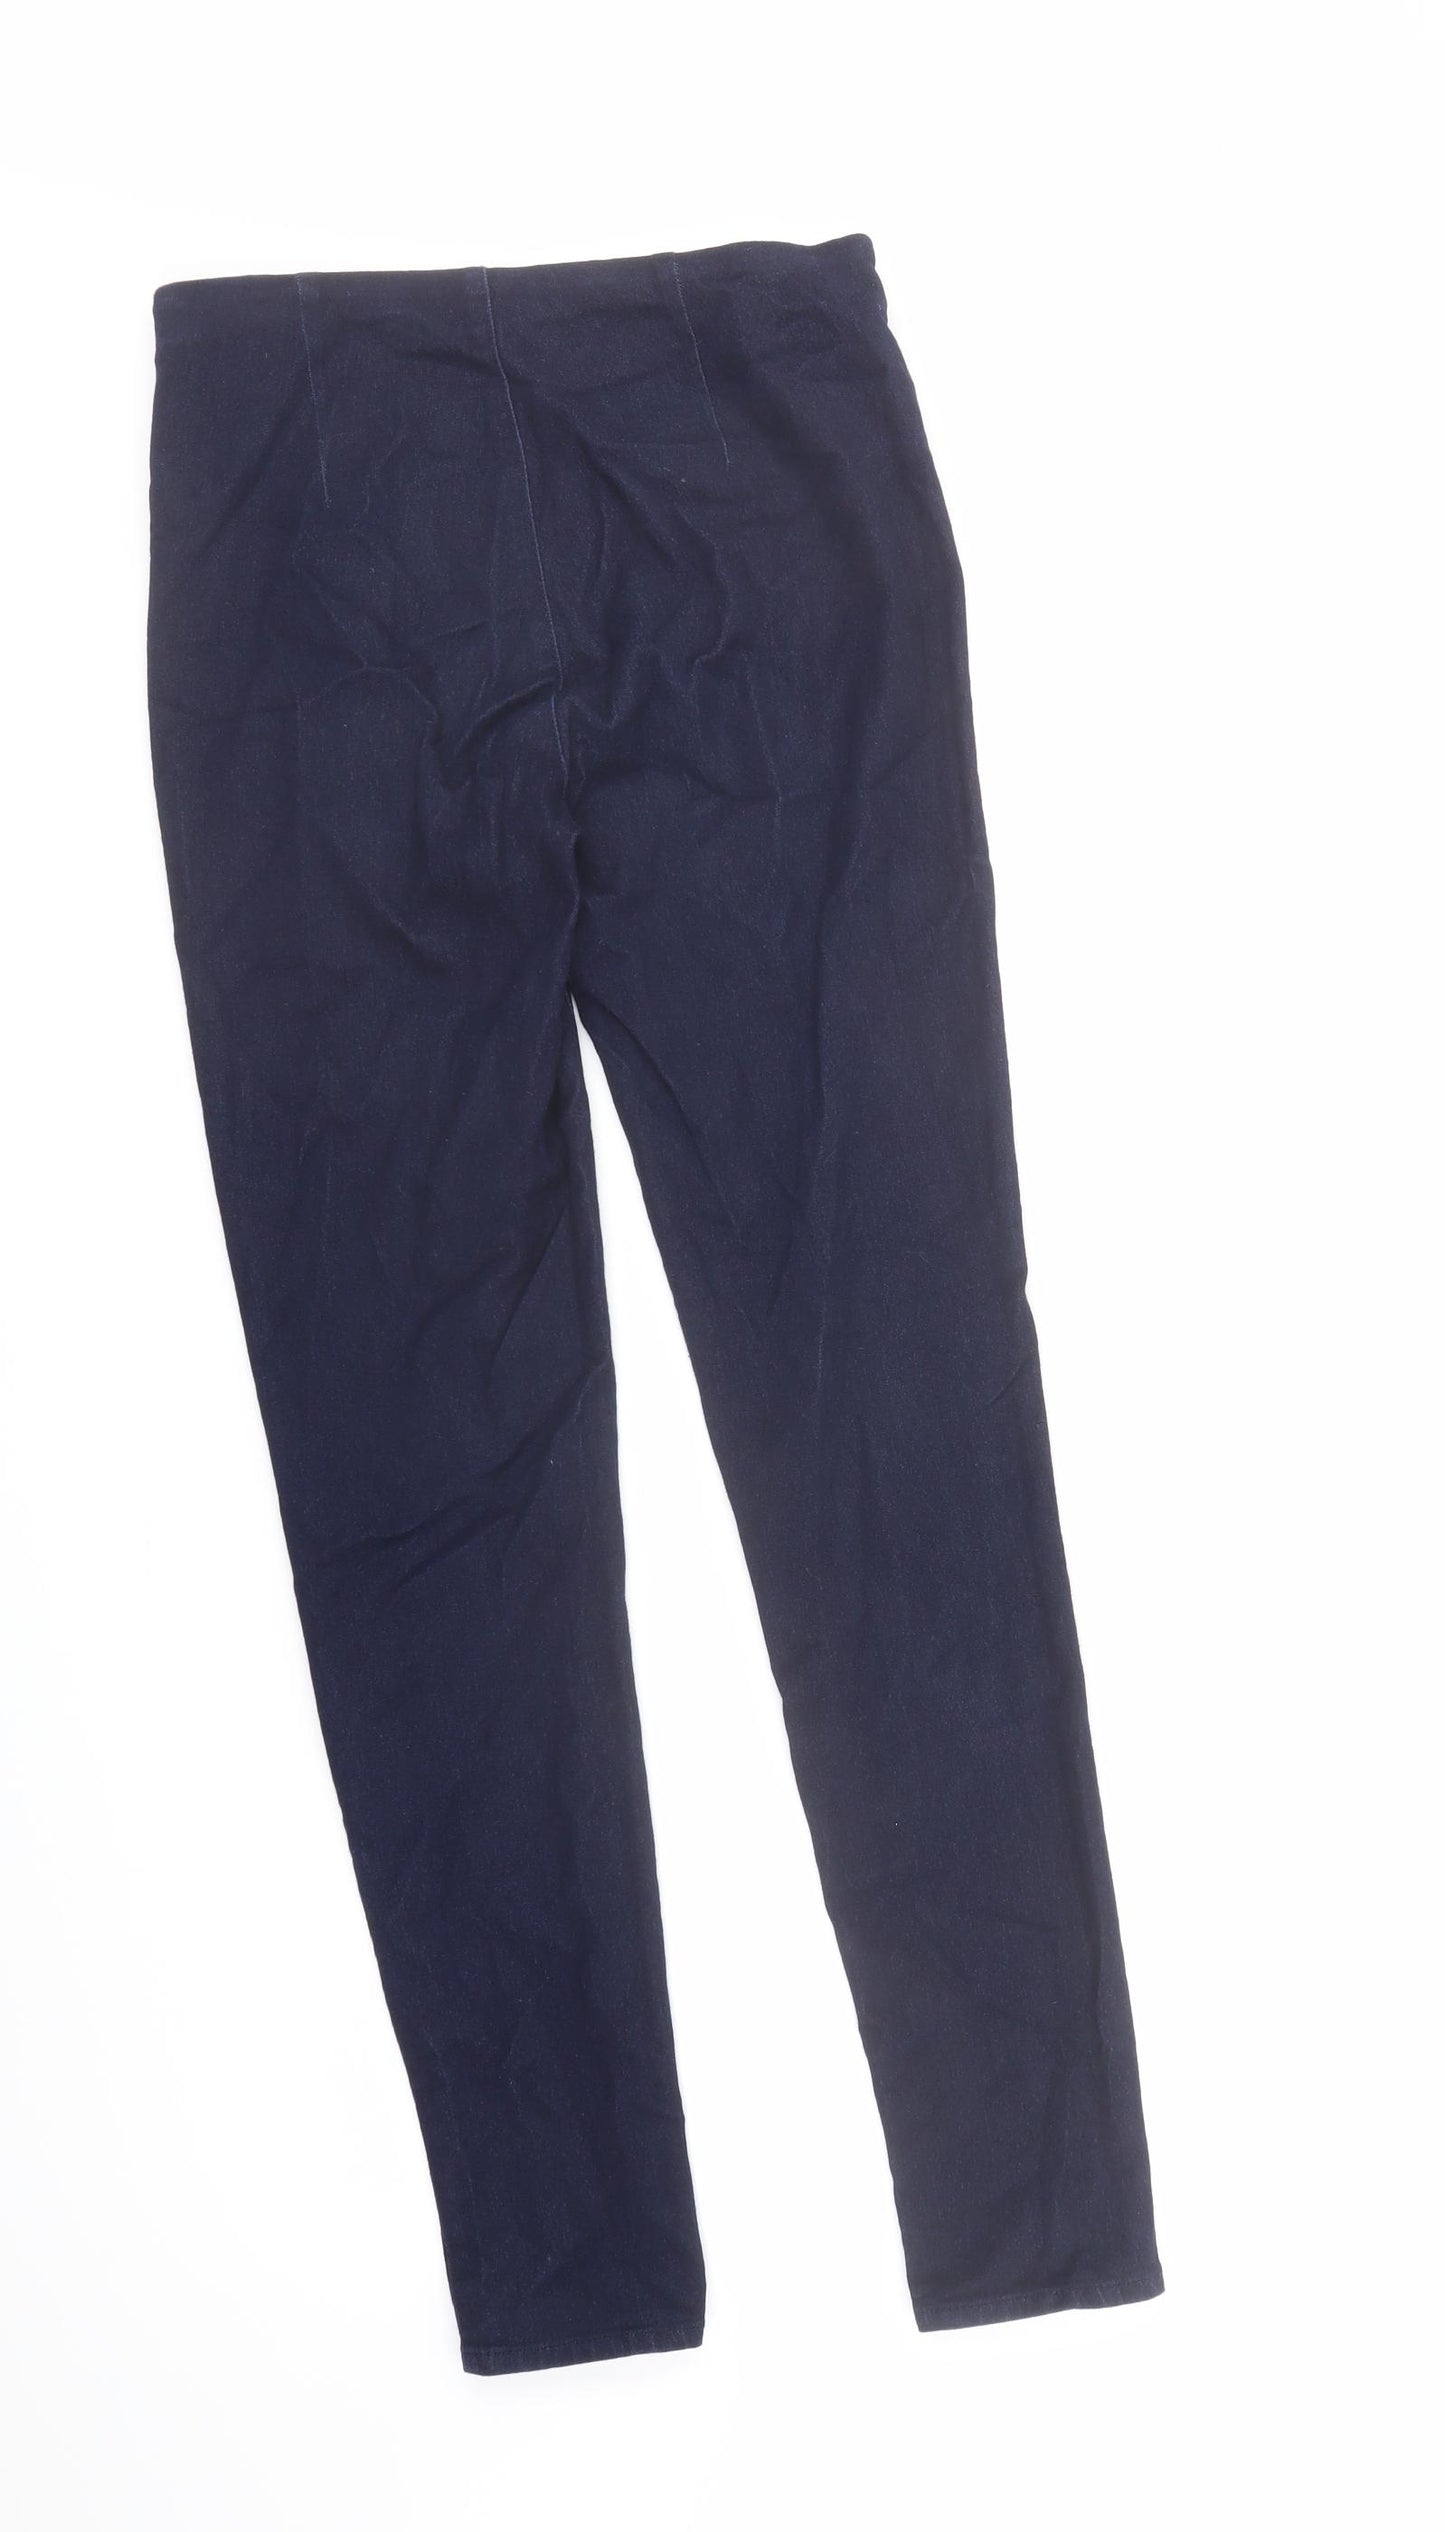 Oasis Womens Blue Cotton Skinny Jeans Size 10 L31 in Regular Zip